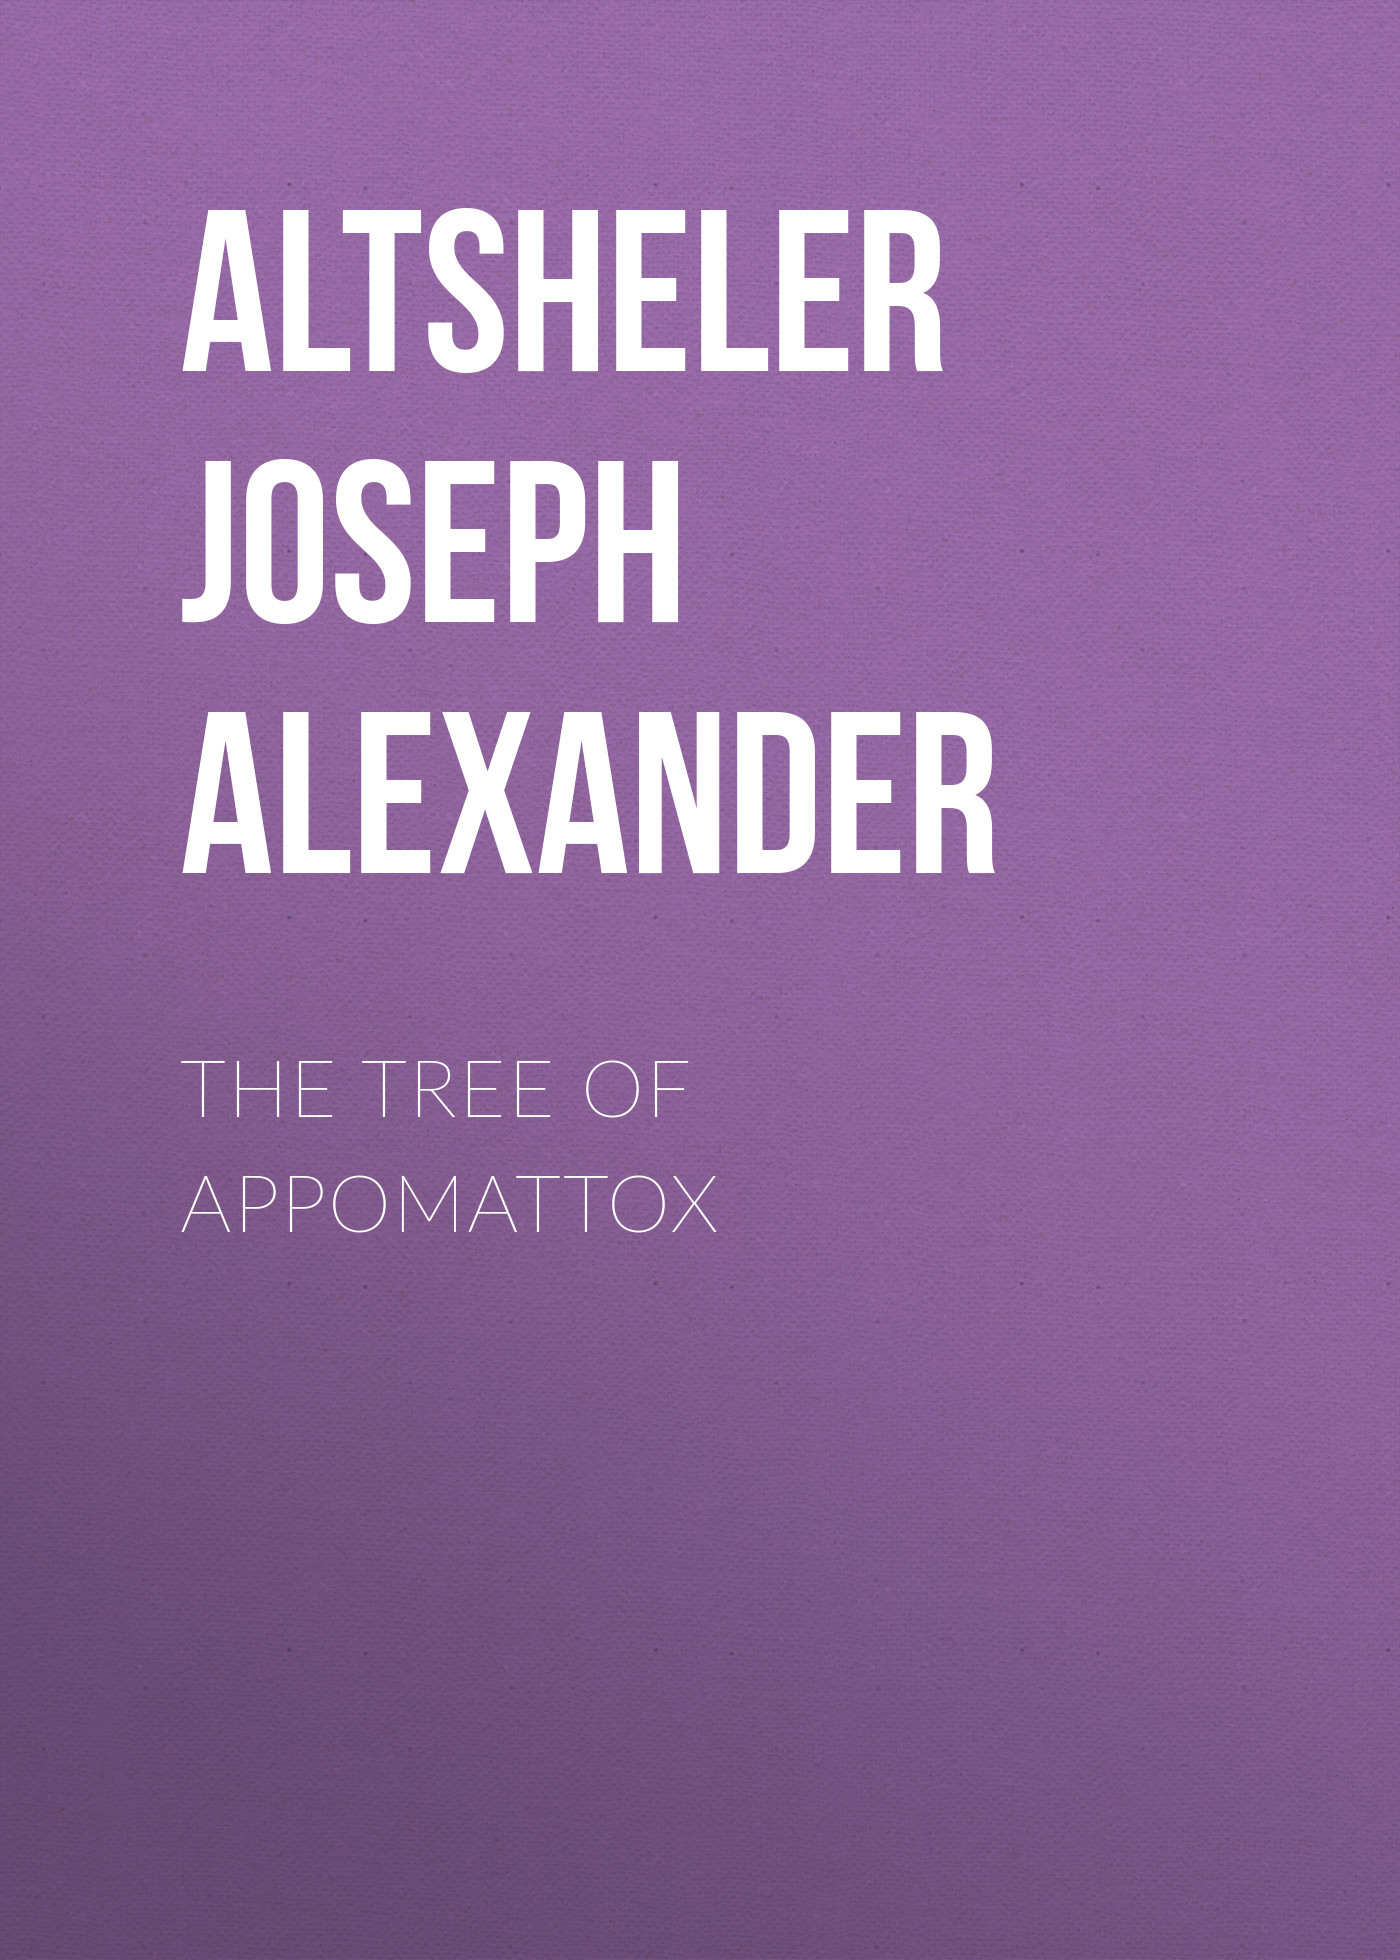 Altsheler Joseph Alexander The Tree of Appomattox